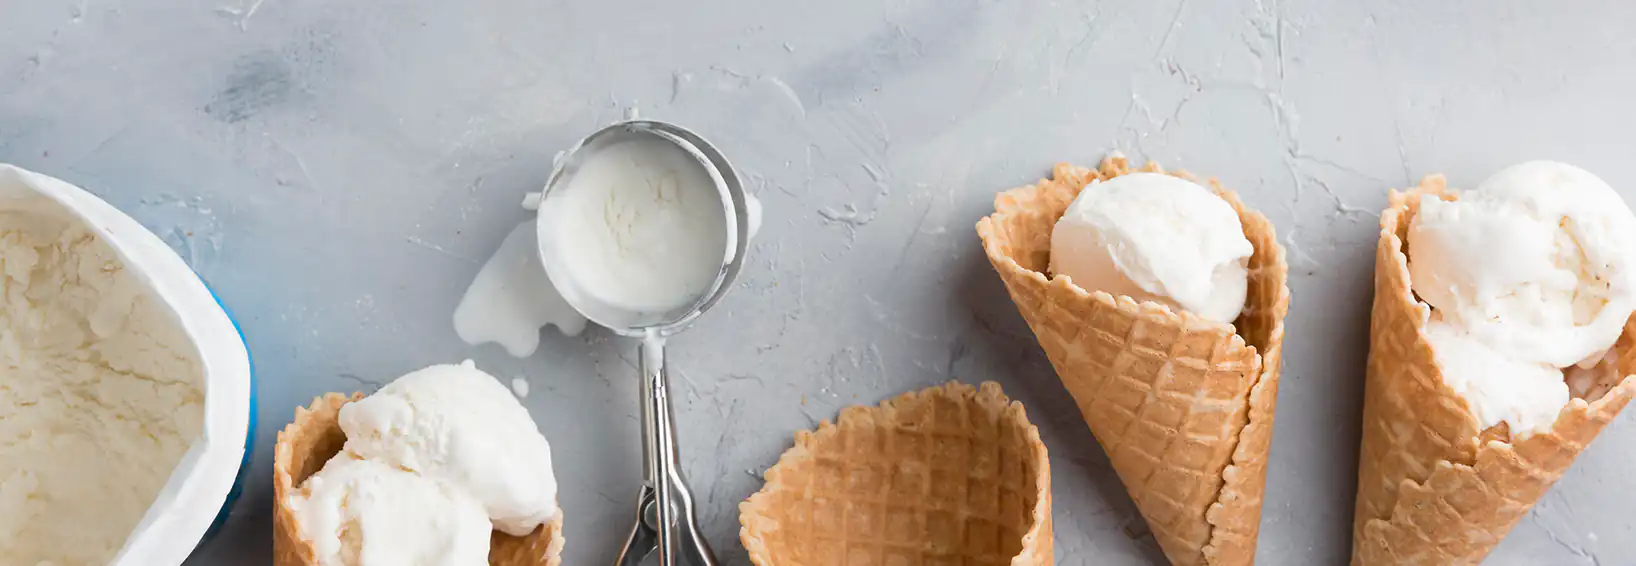 how to make ice cream without ice cream maker vanilla